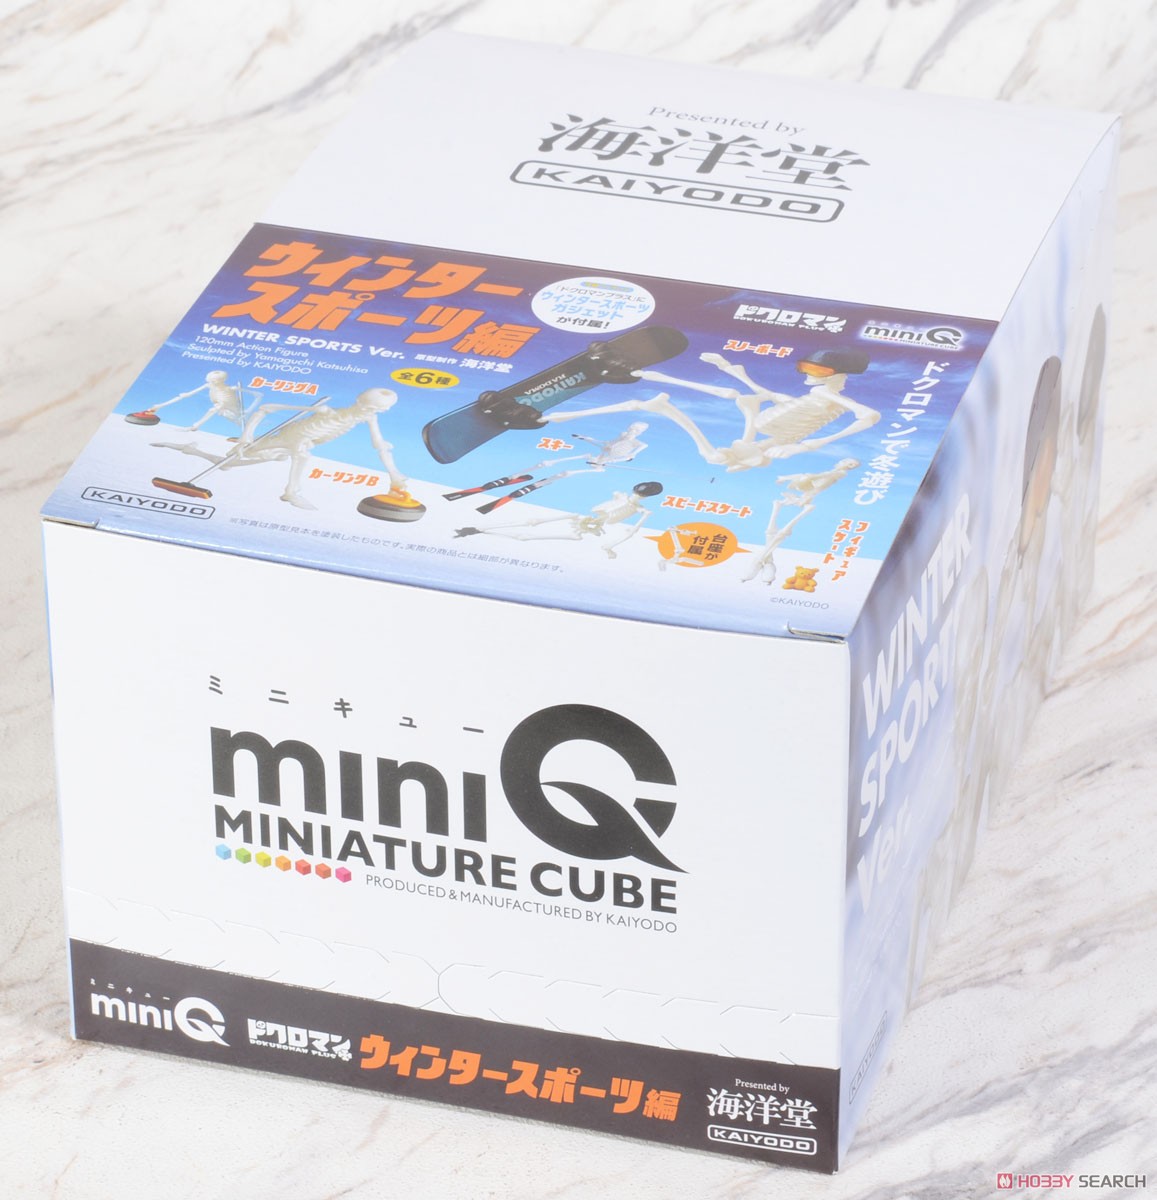 miniQ Miniature Cube Dokuroman Plus Winter Sports (Set of 8) (Shokugan) Package1